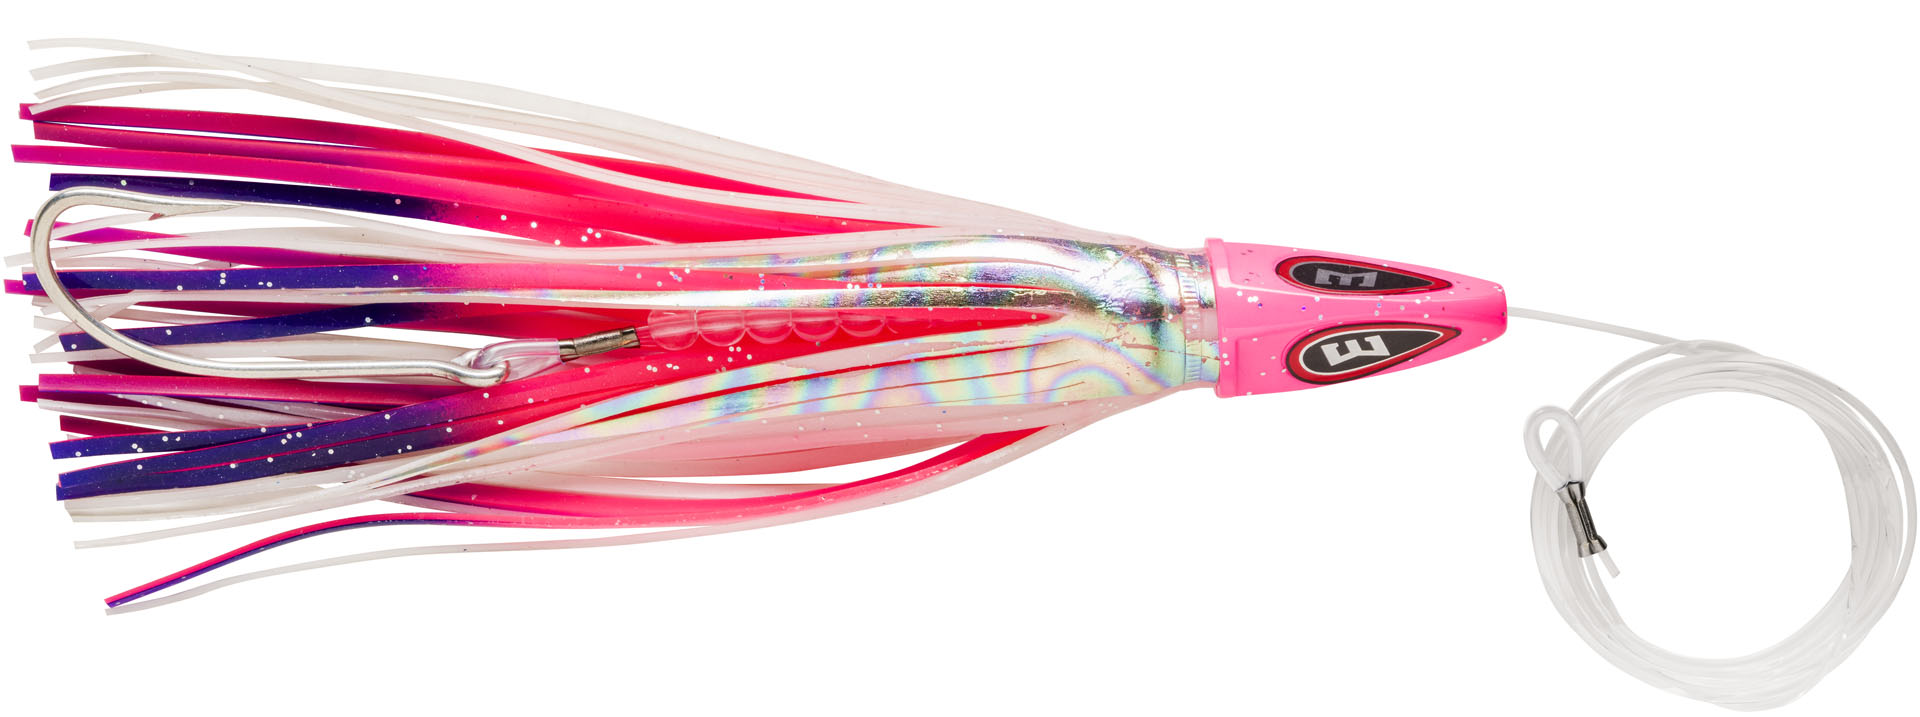 Williamson Hspeed Tuna Catcher Rig 19cm (99g) - Candy floss